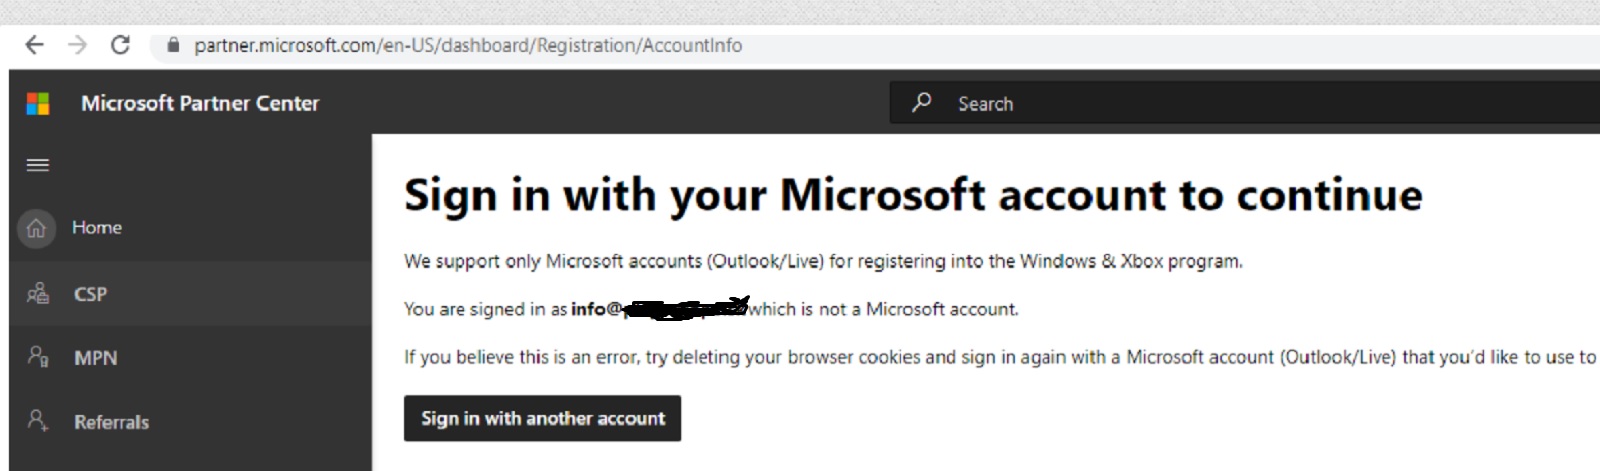 error message Microsoft partner center